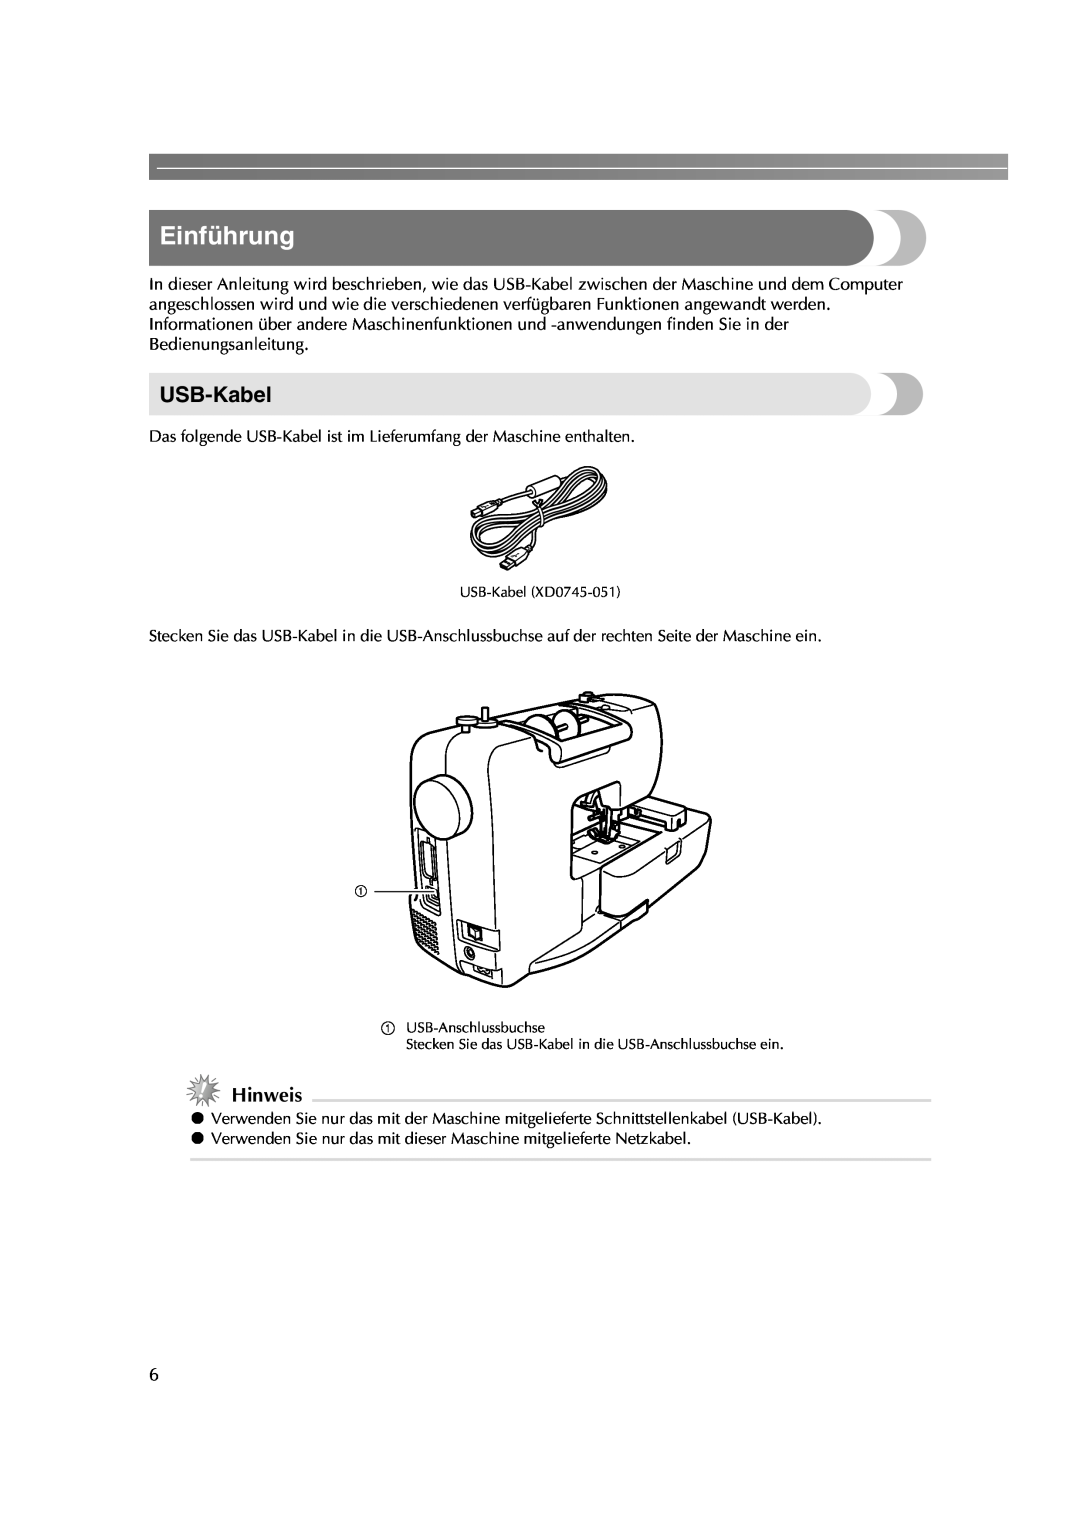 Brother HE-240 instruction manual Einführung, USB-Kabel, Hinweis 